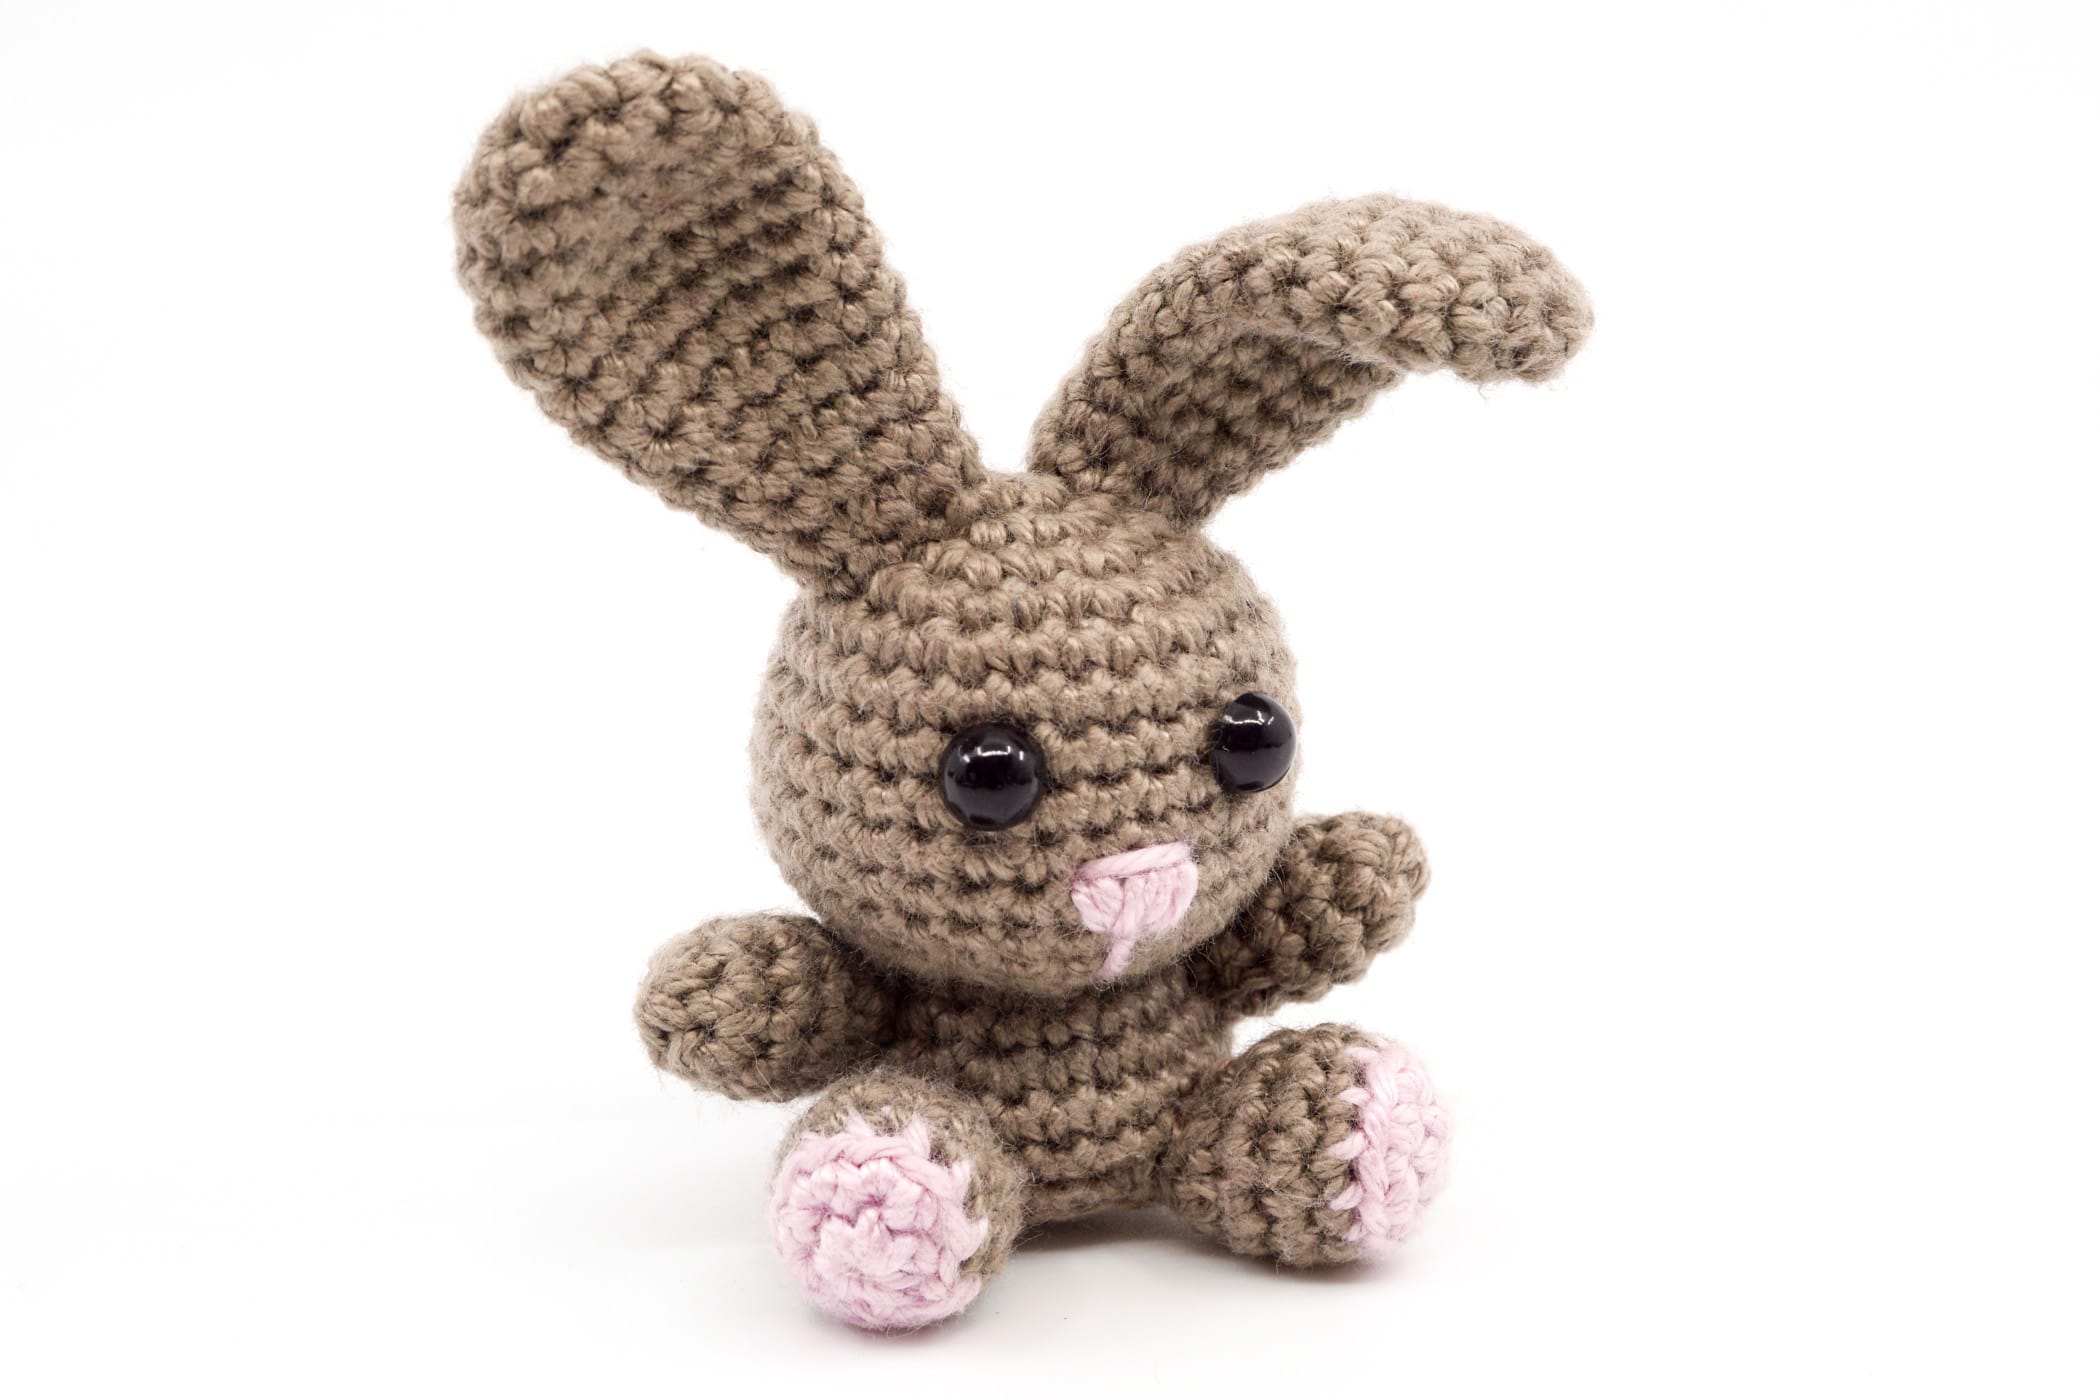 Free Crochet Bunny Amigurumi Pattern